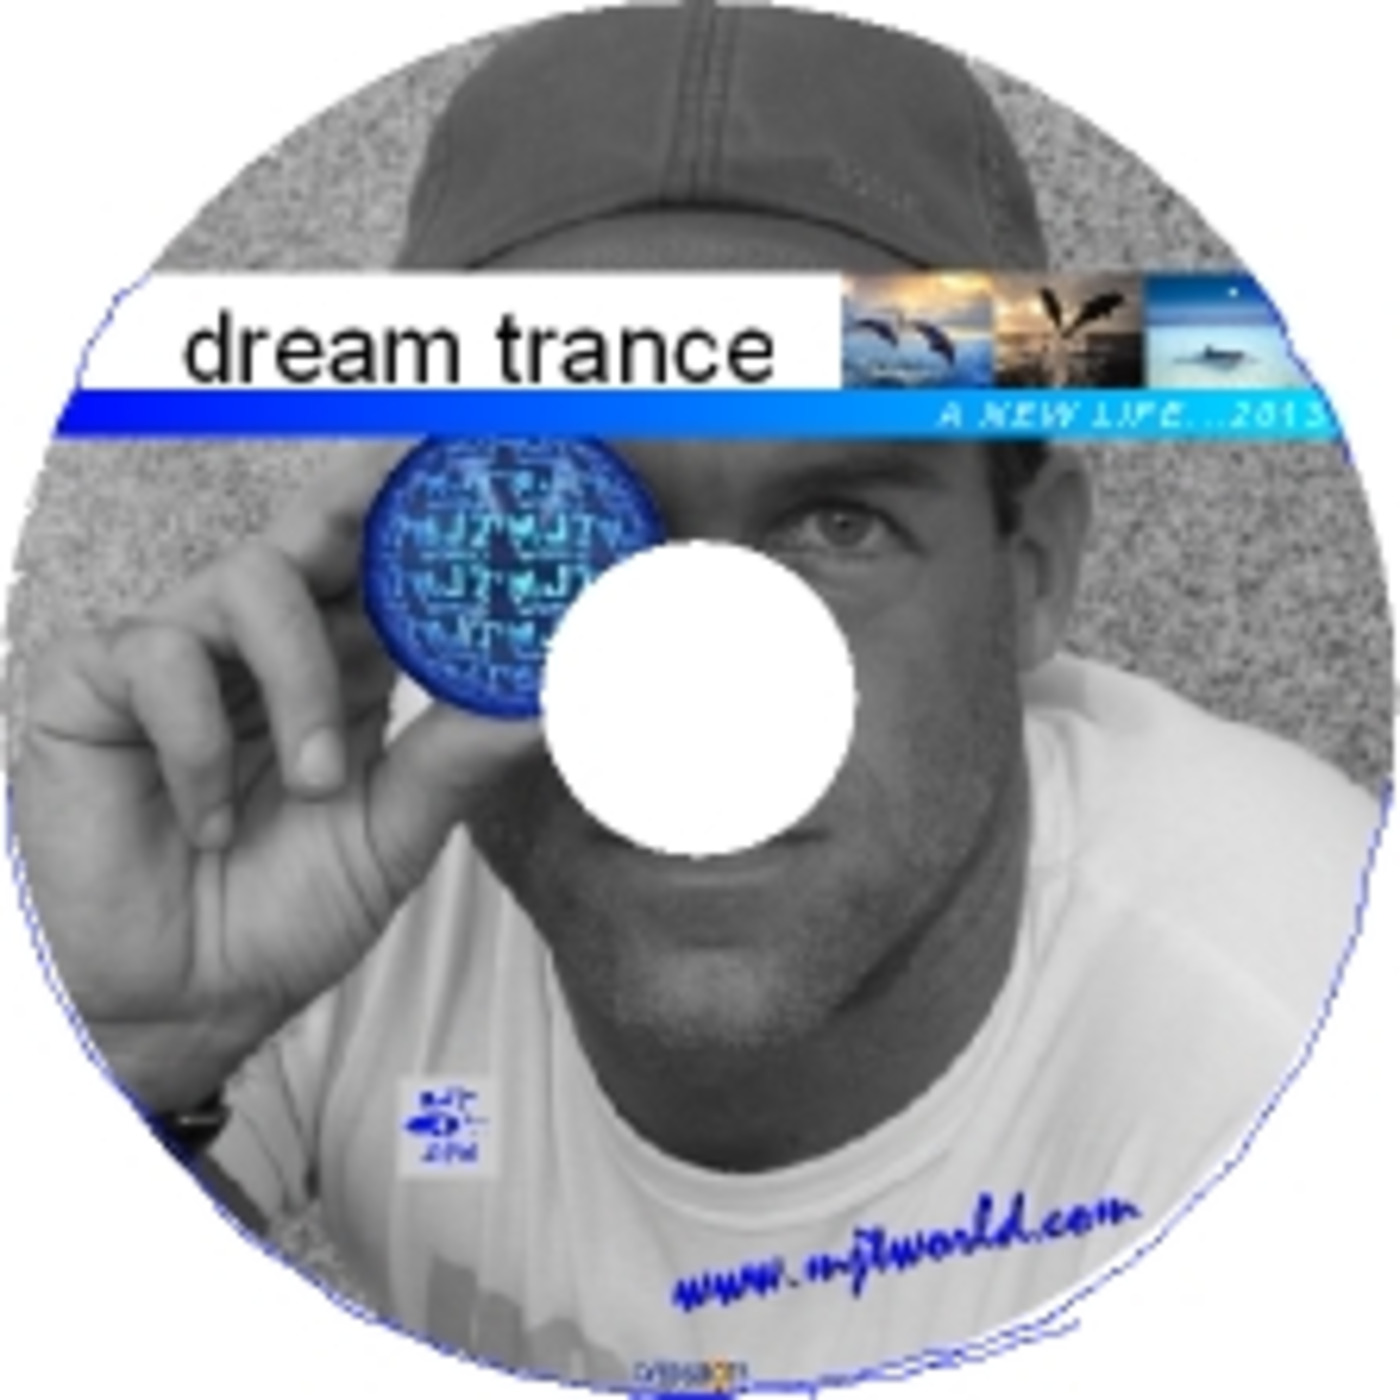 Dreamtrance - A new life DJ MJT